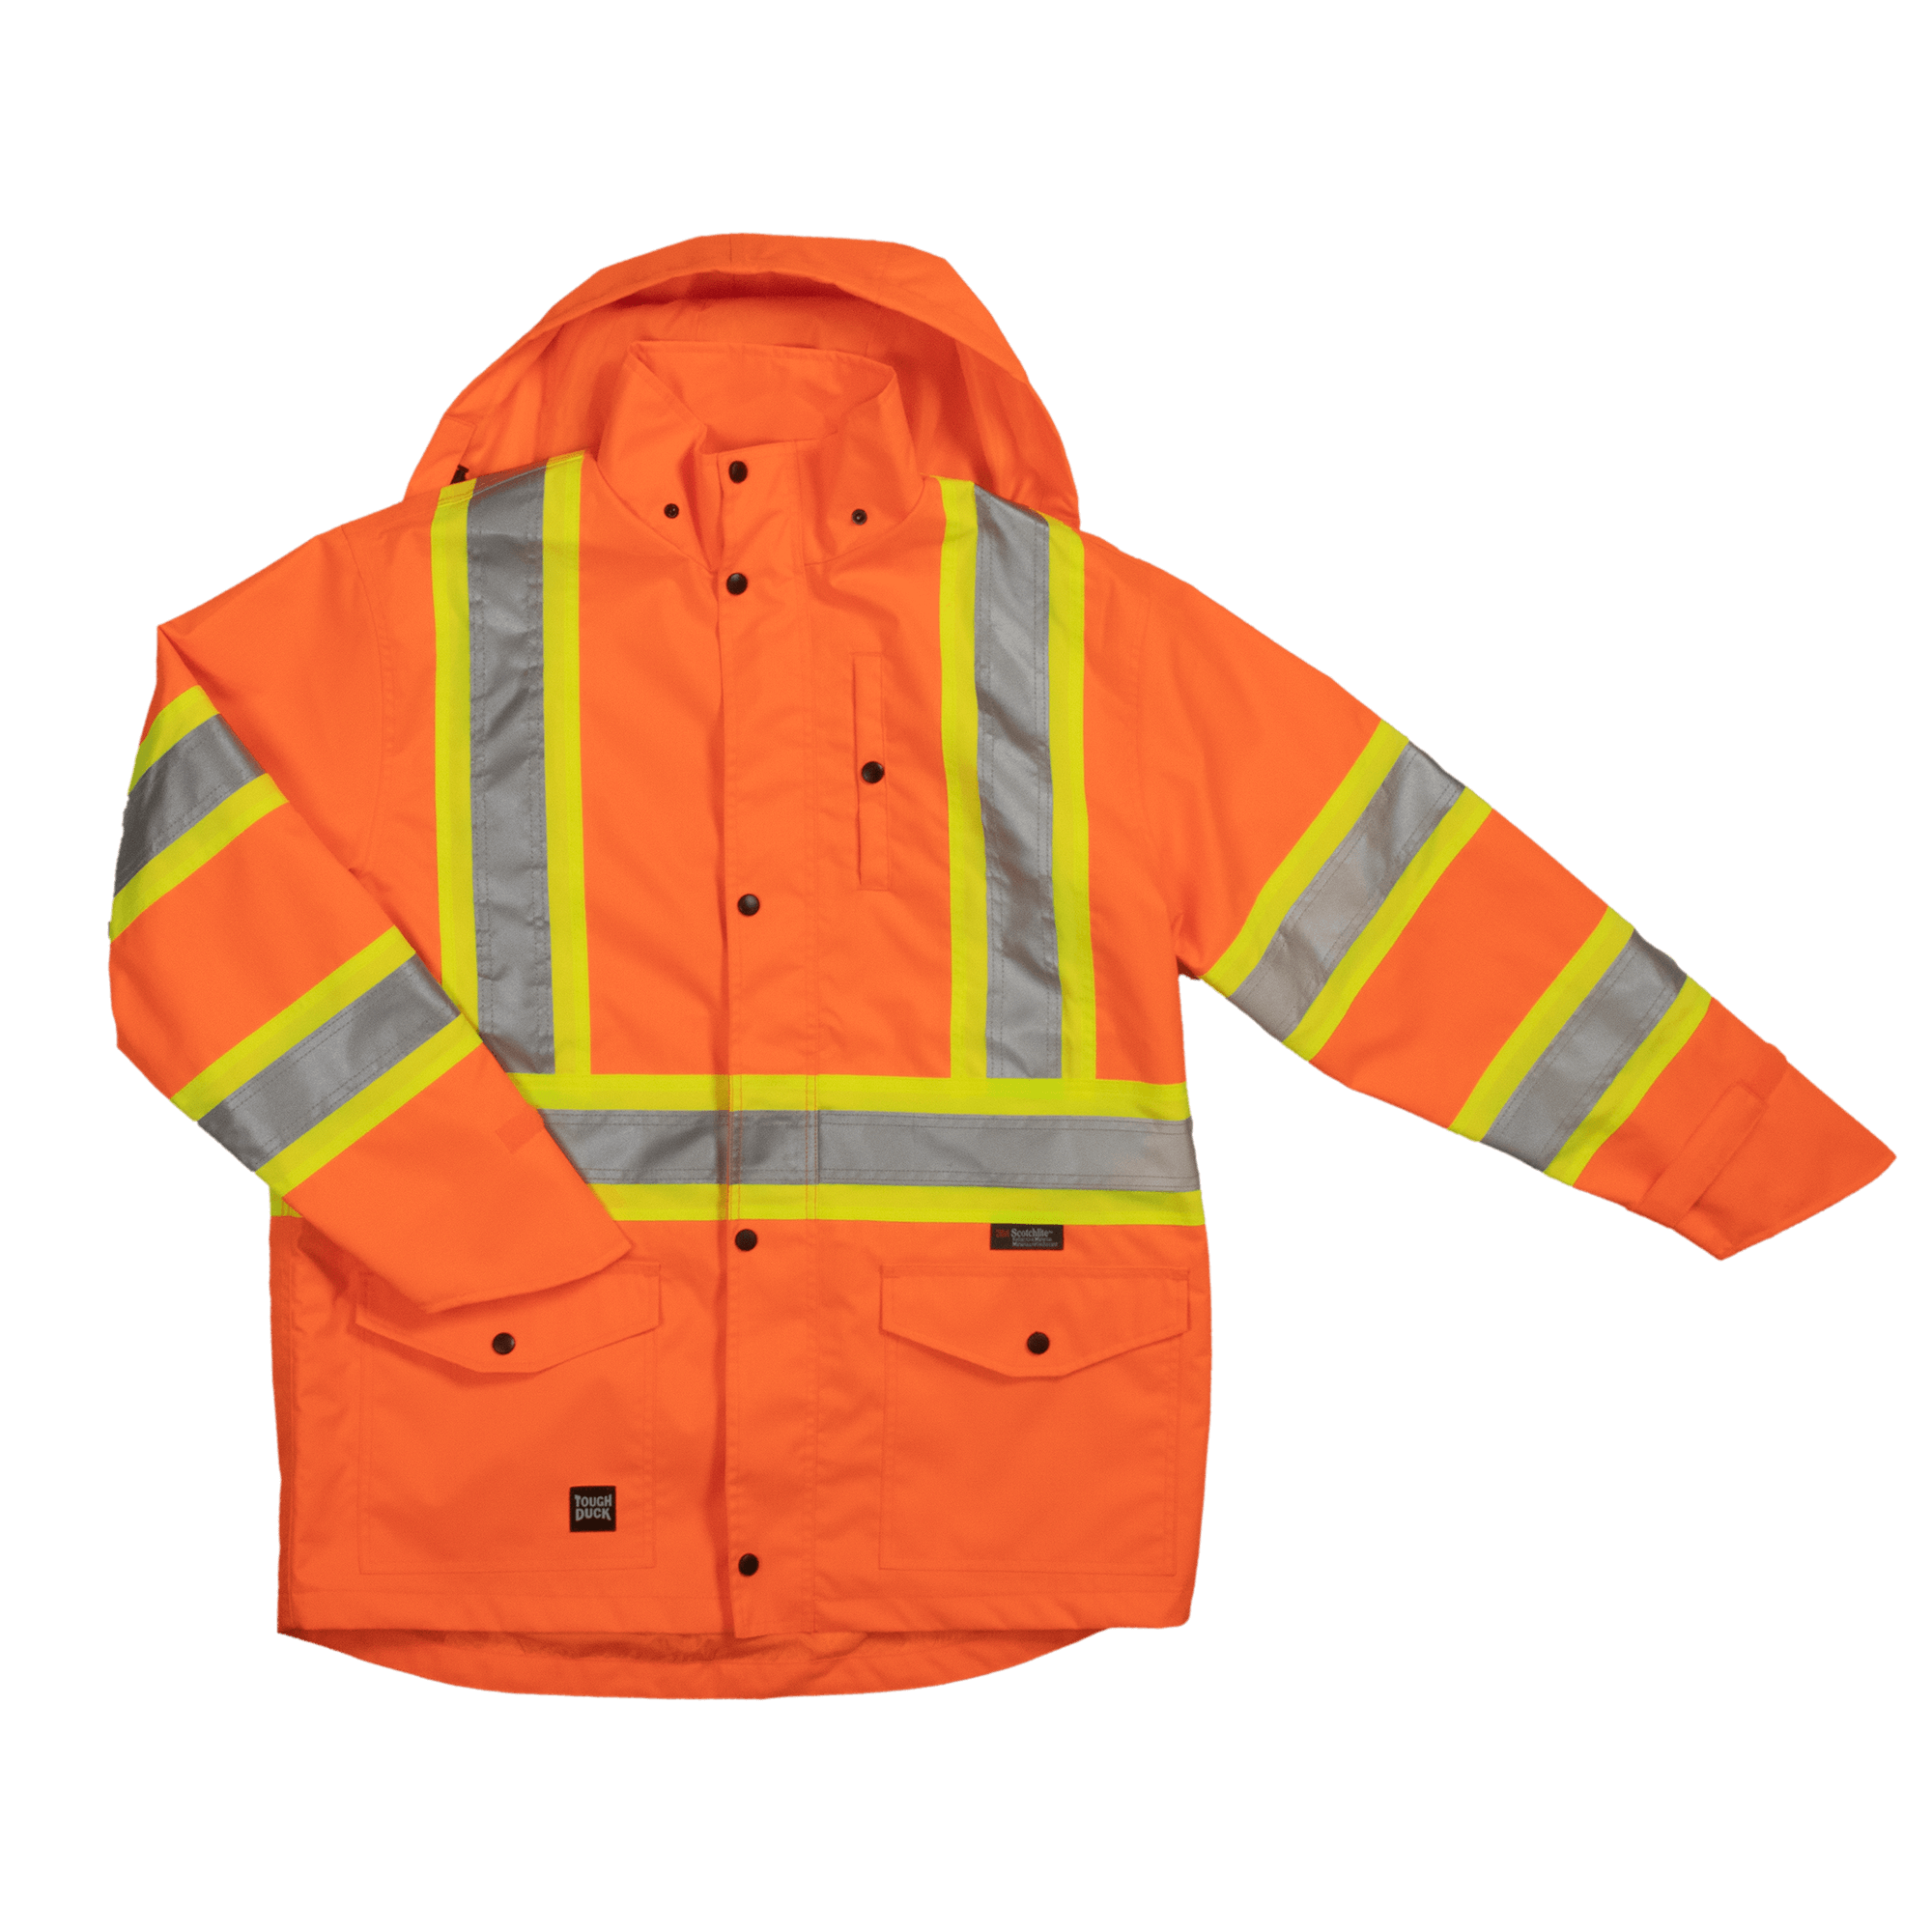 https://0901.nccdn.net/4_2/000/000/03f/ac7/sj35-flor-f-tough-duck-safety-rain-jacket-fluorescent-orange-fro.png